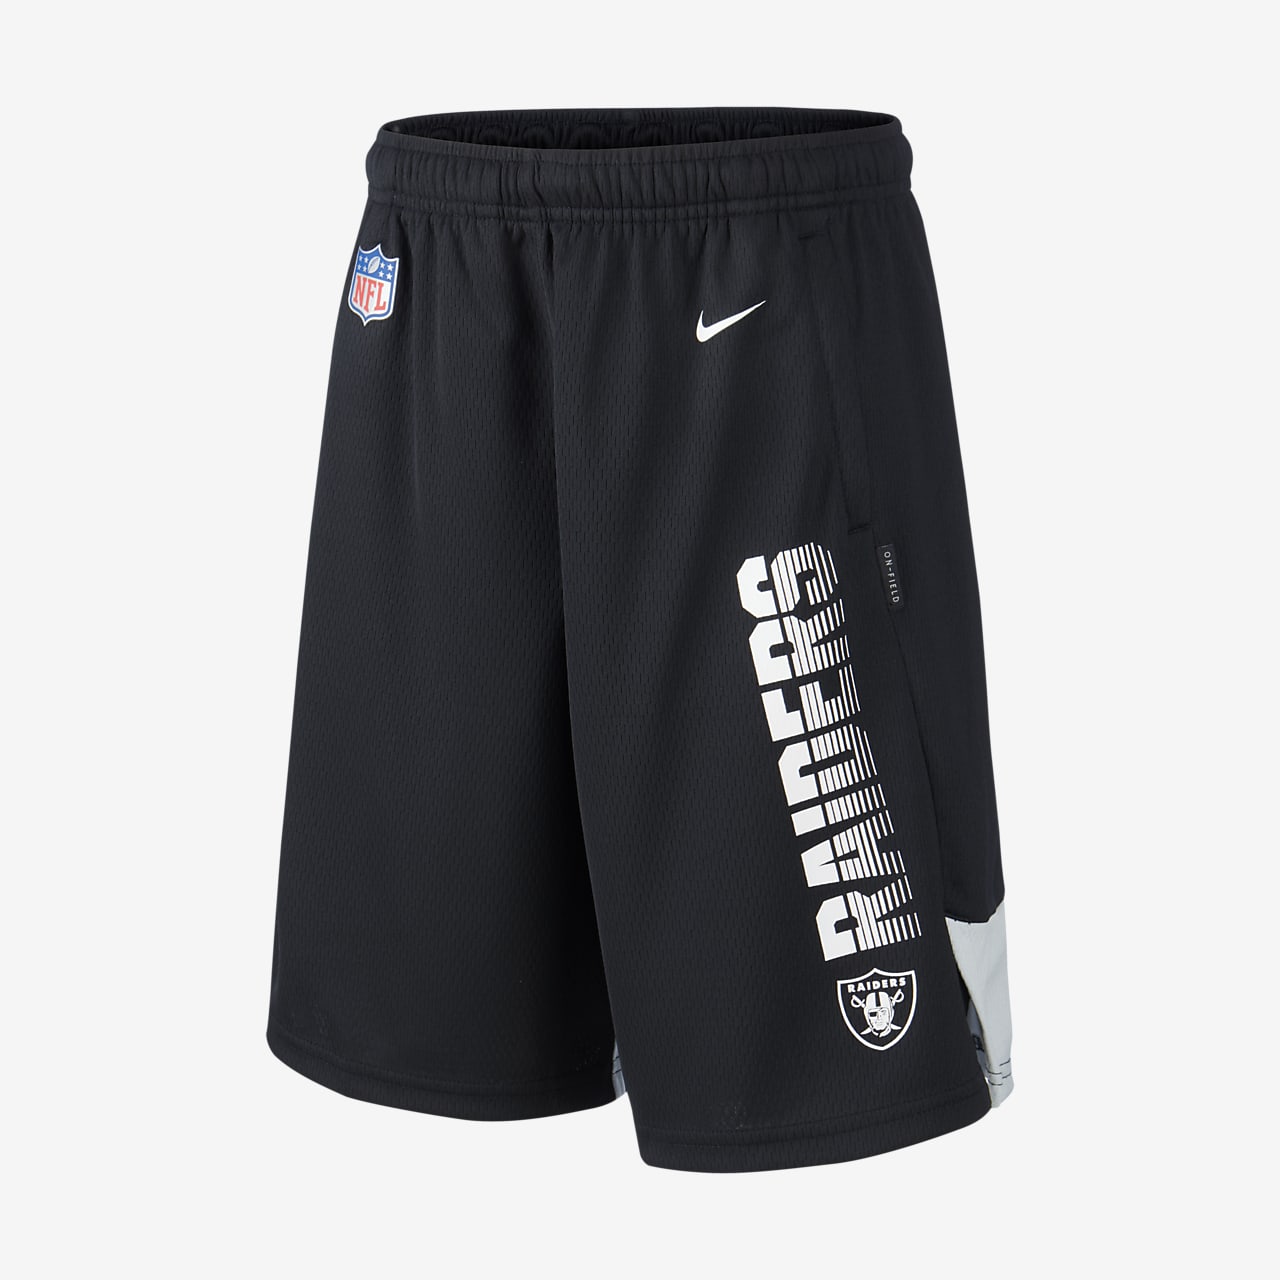 Nike (NFL Raiders) Older Kids' Shorts 